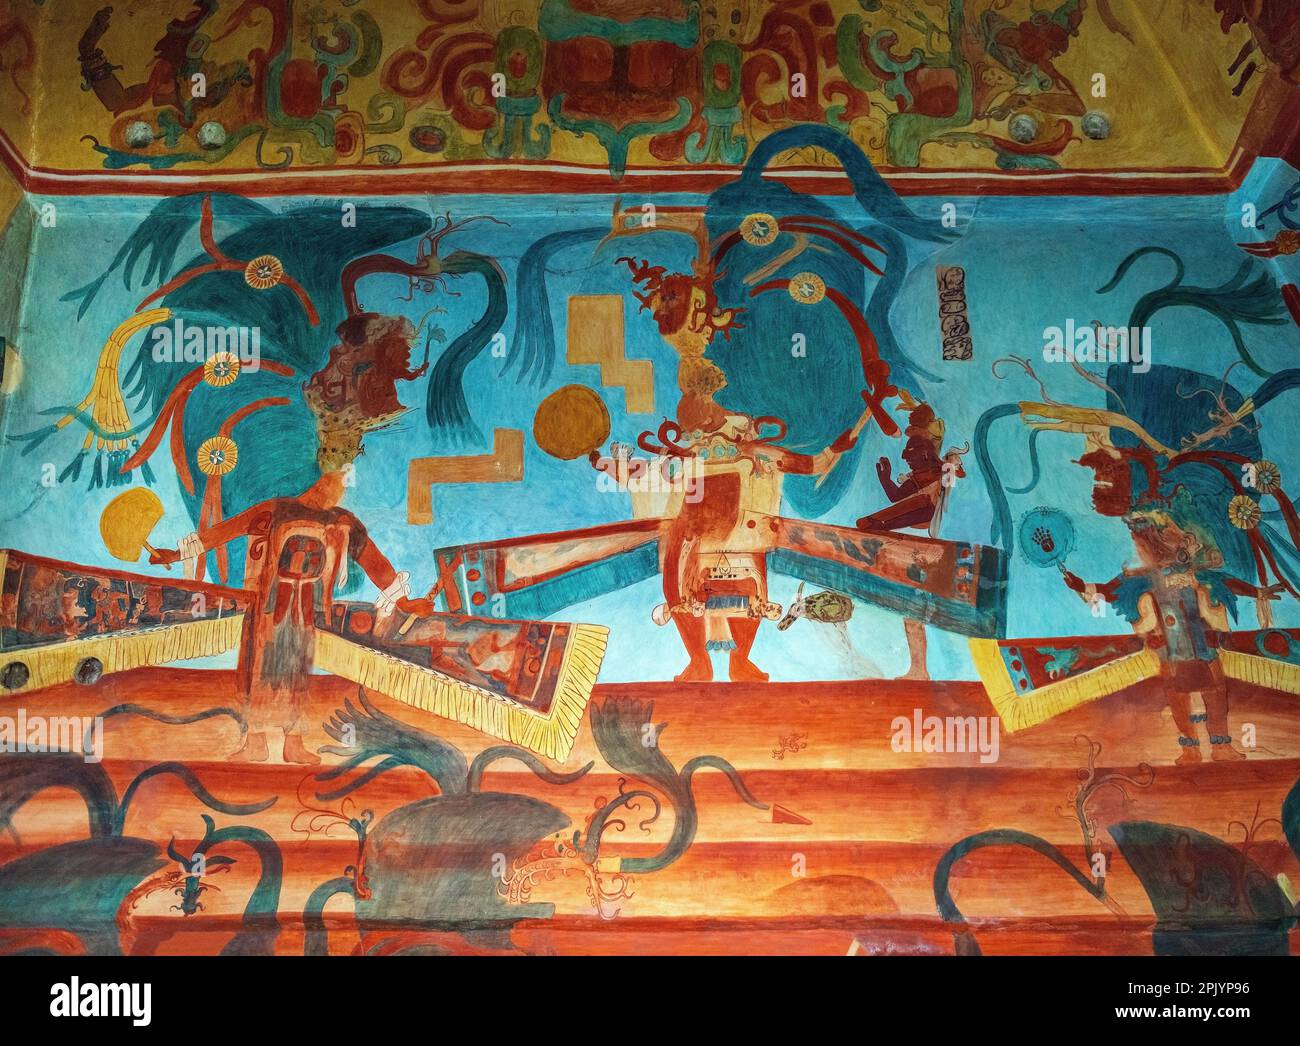 Mayan fresco mural painting in room 3 of the temple of murals in the Maya city of Bonampak, Chiapas, Mexico. Stock Photo